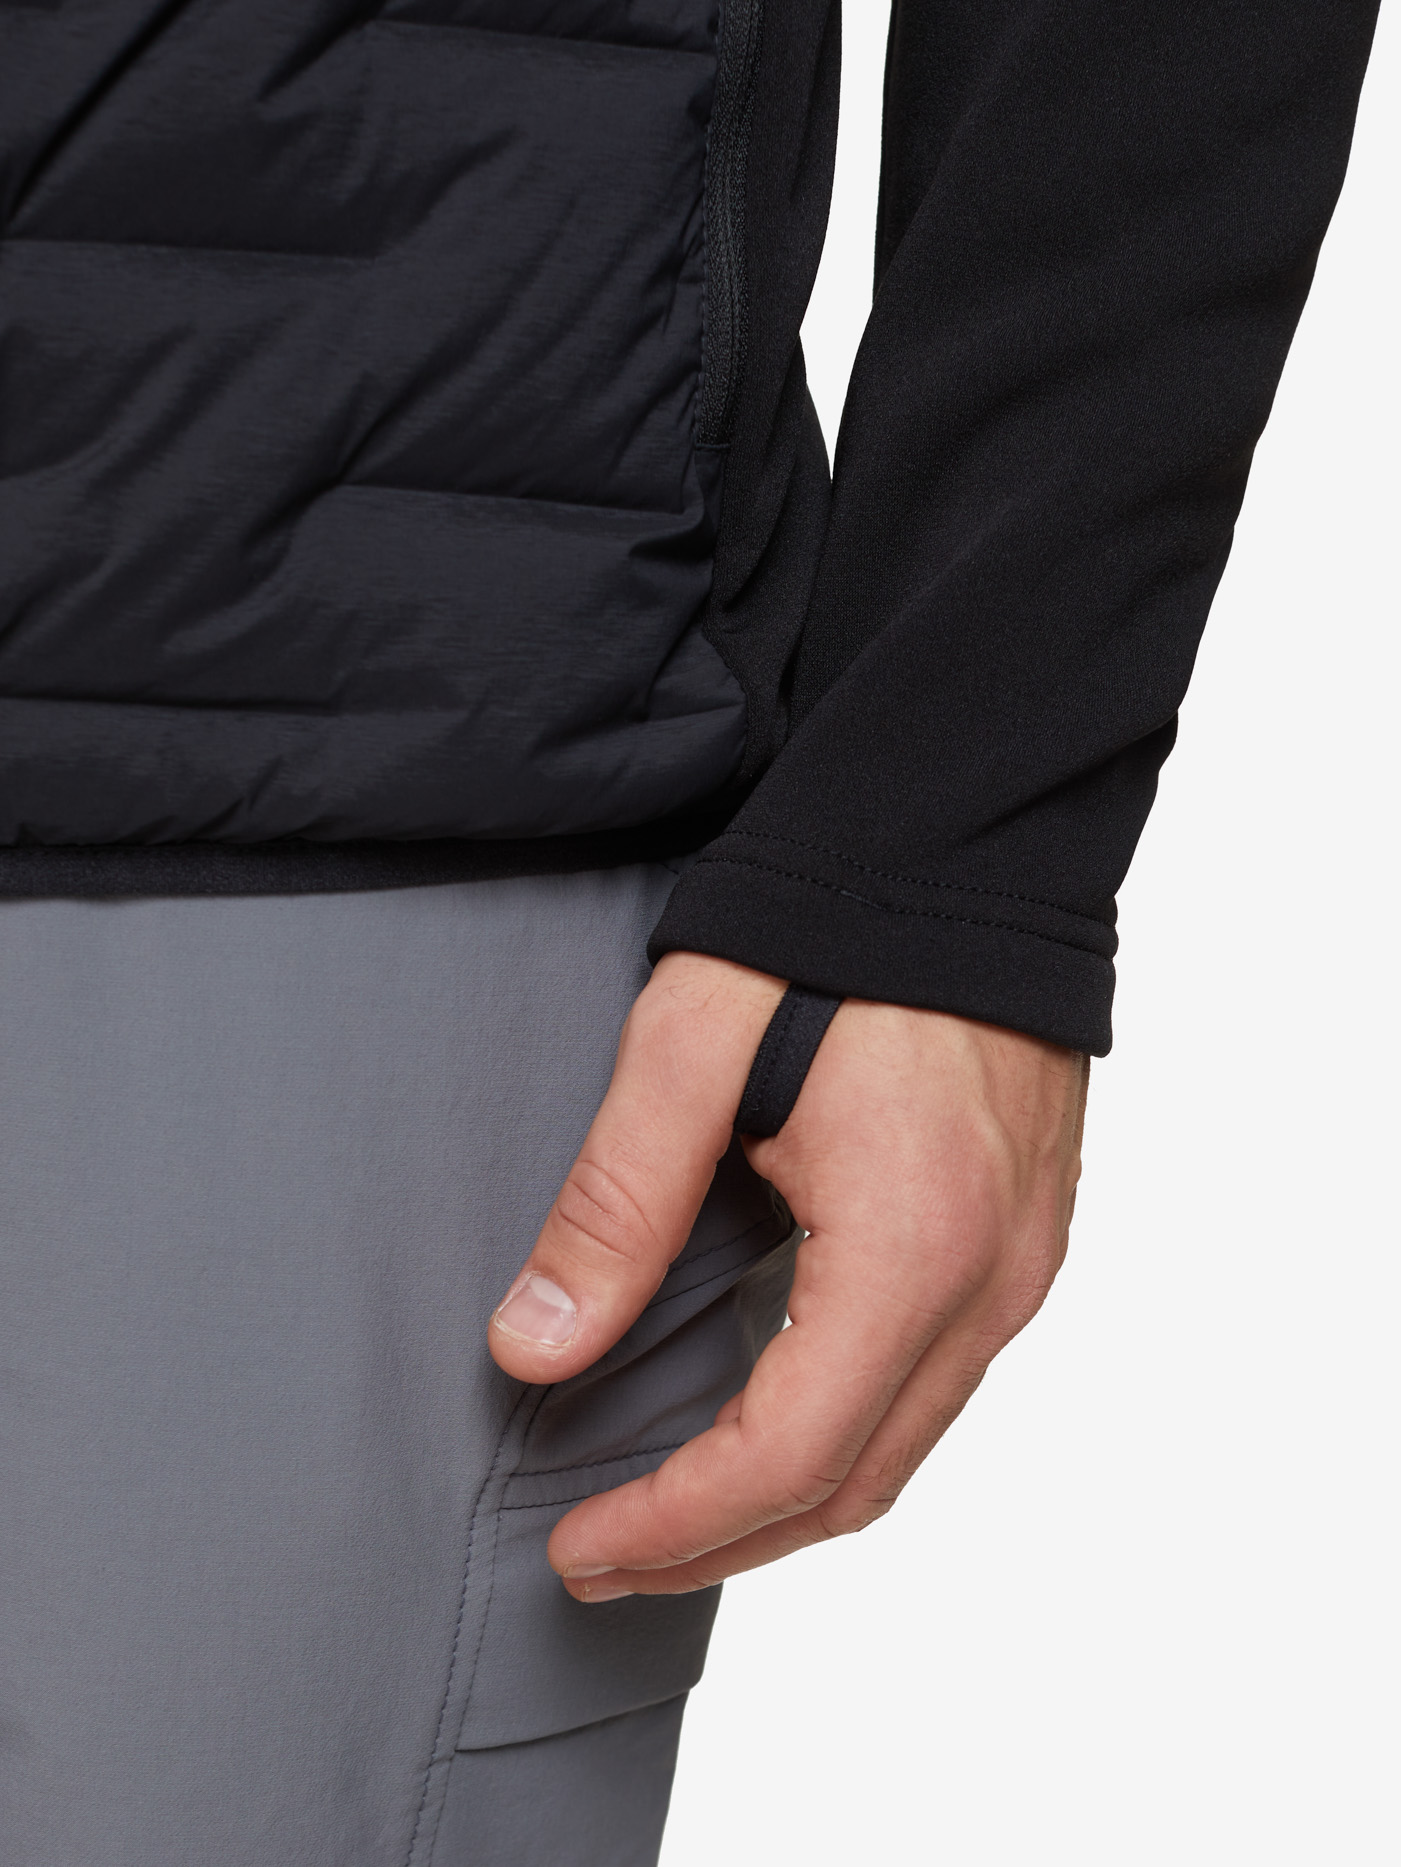 Куртка BASK, размер 50, цвет черный 19031-9009-050 Chamonix light hybrid v2 - фото 5